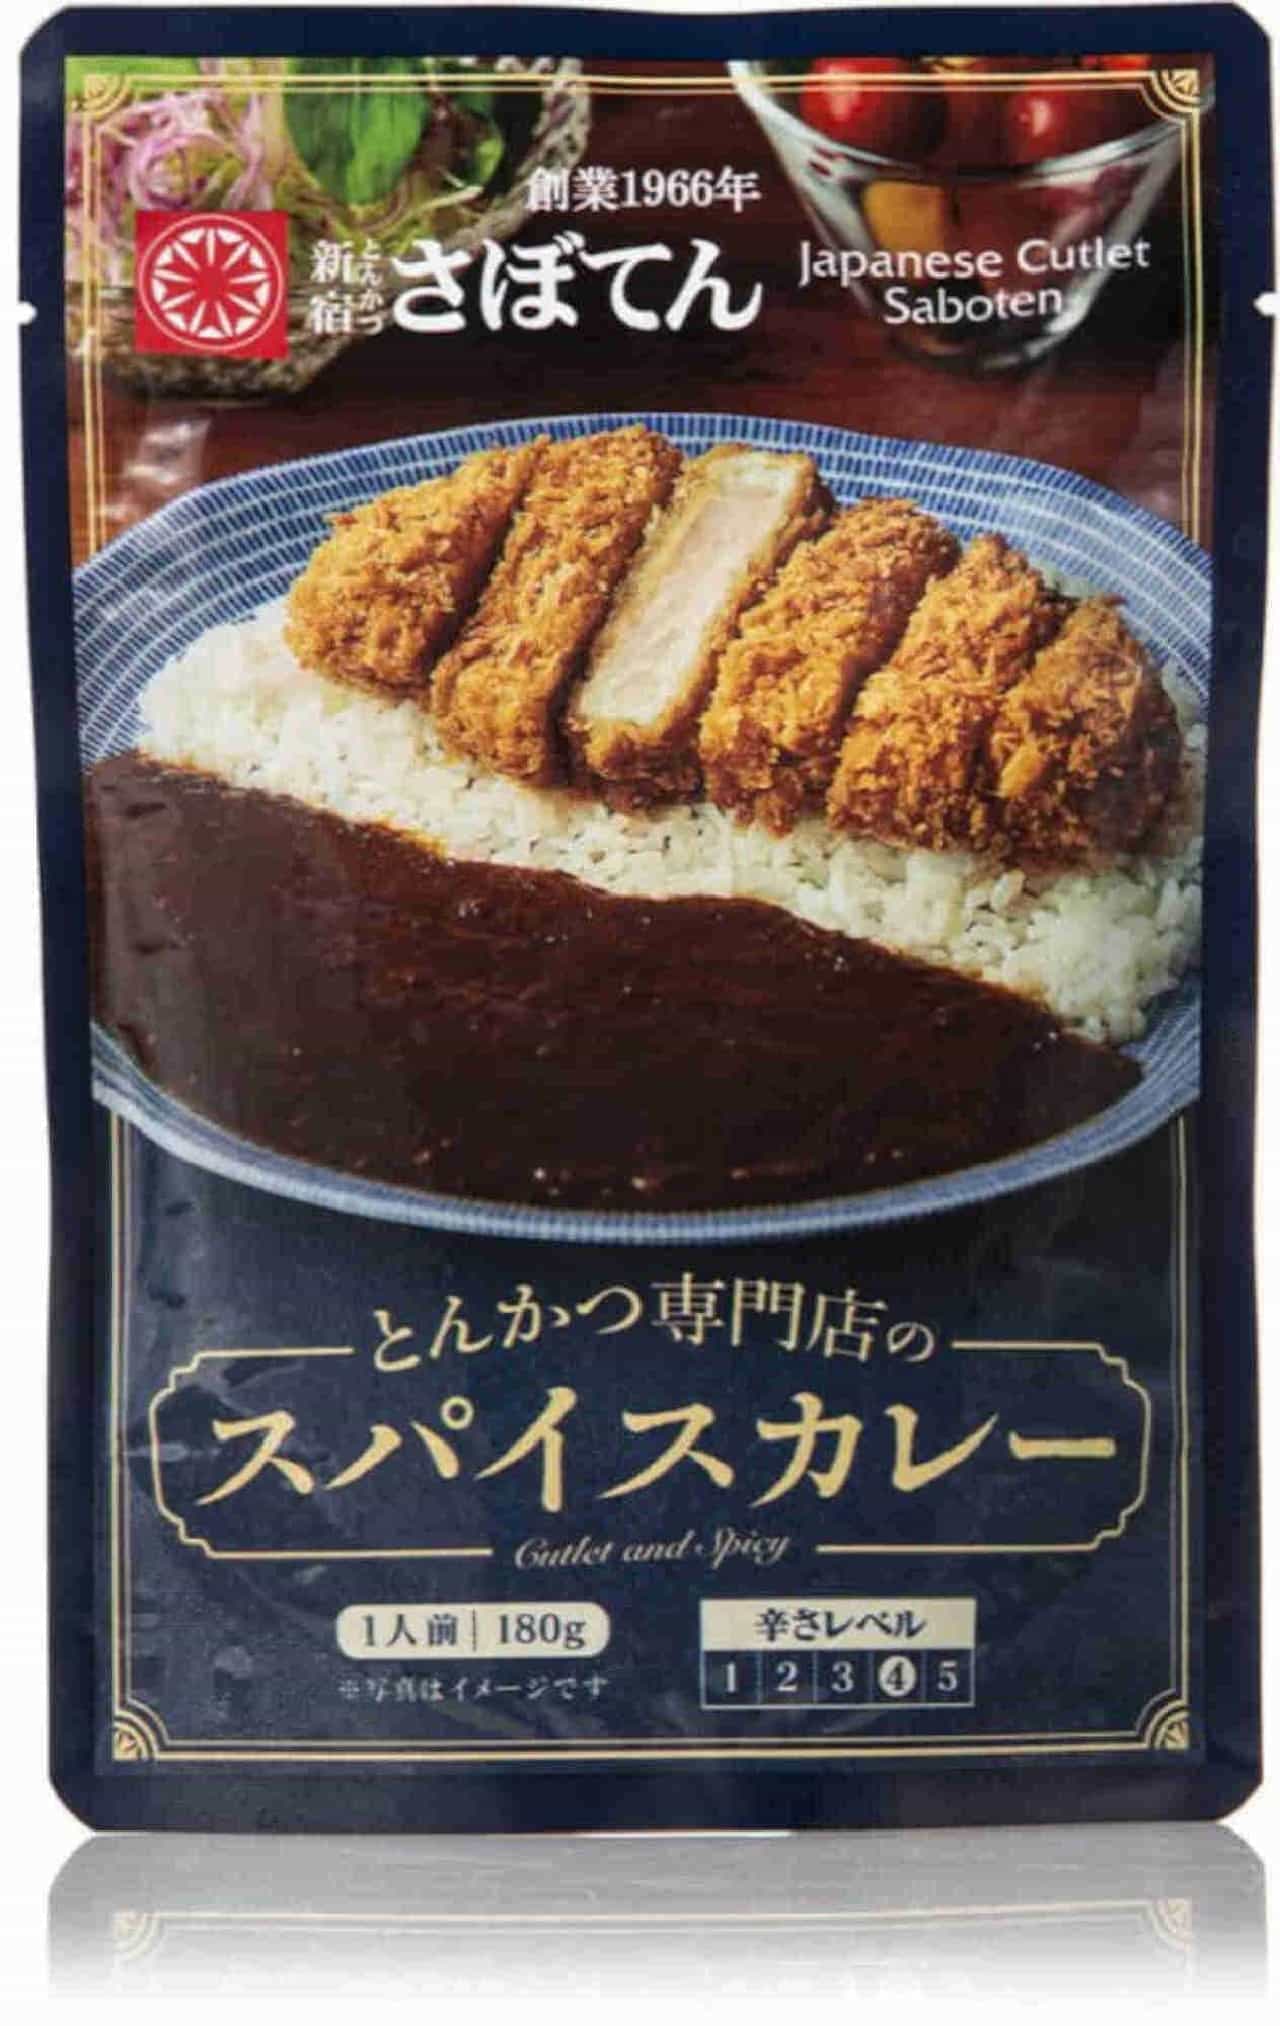 Saboten "Tonkatsu specialty store spice curry"